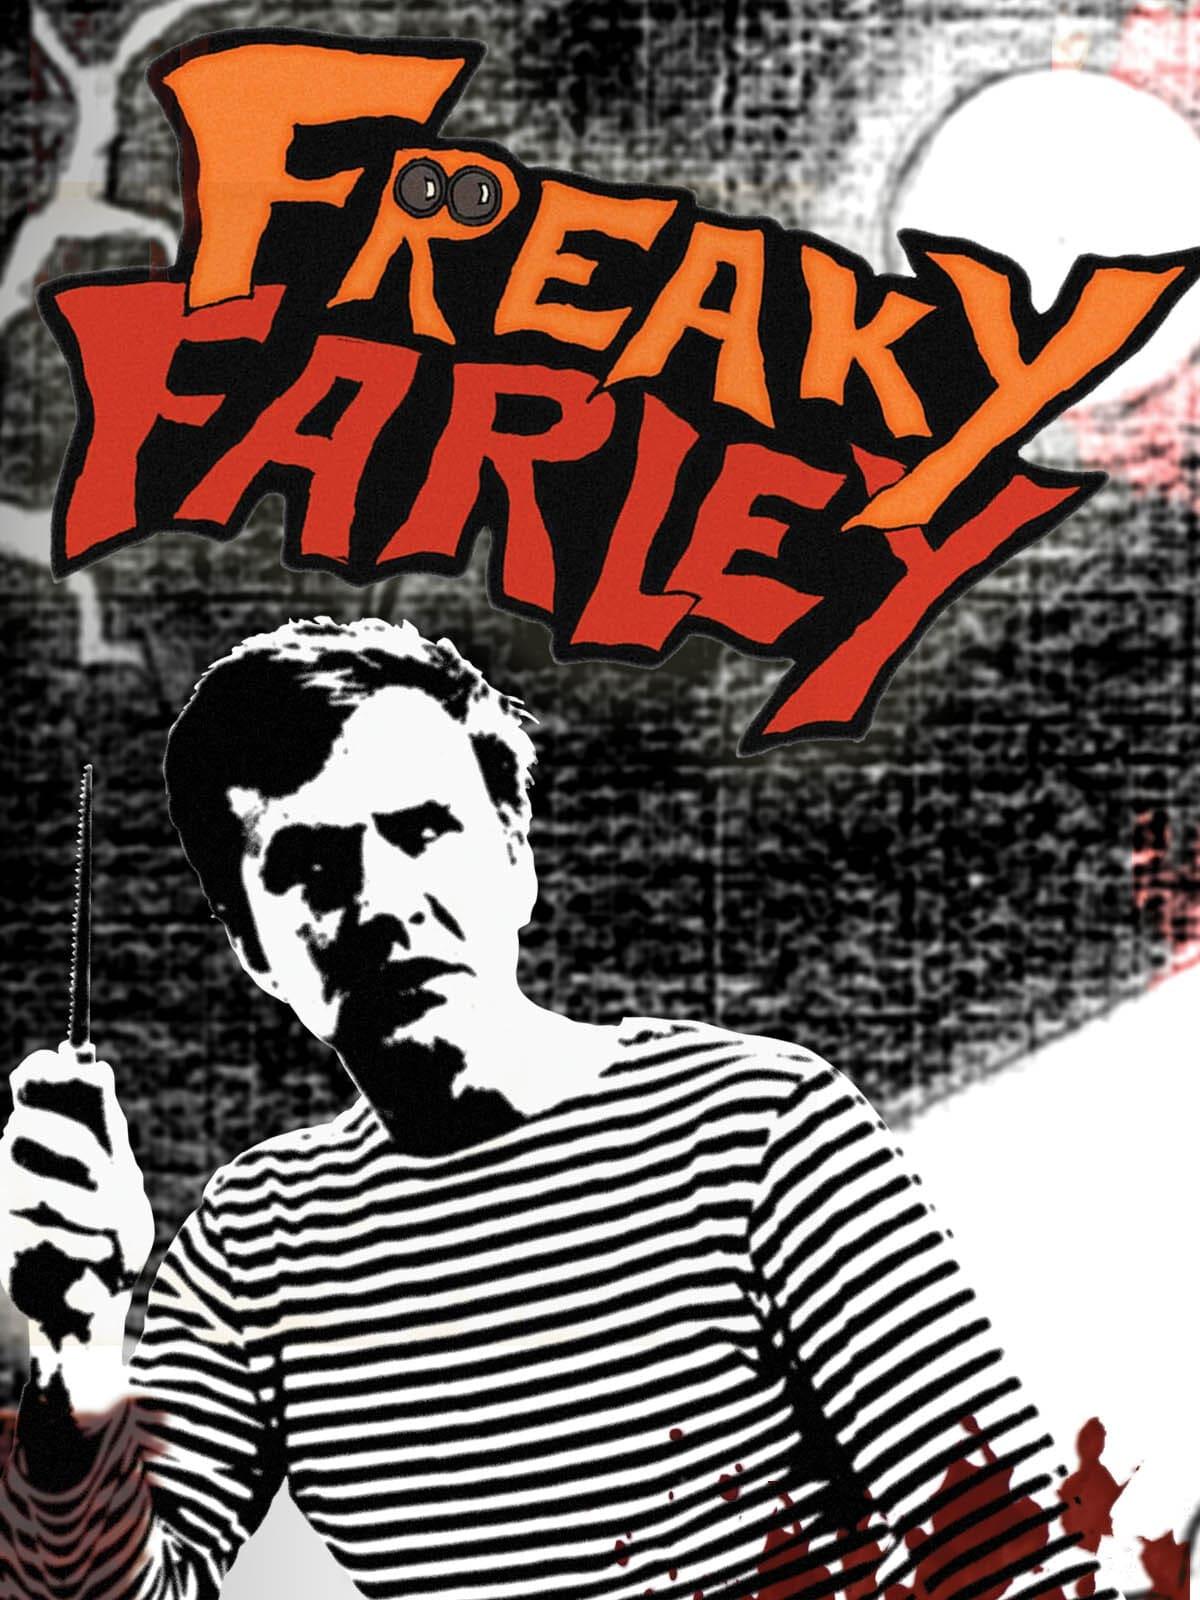 Freaky Farley poster